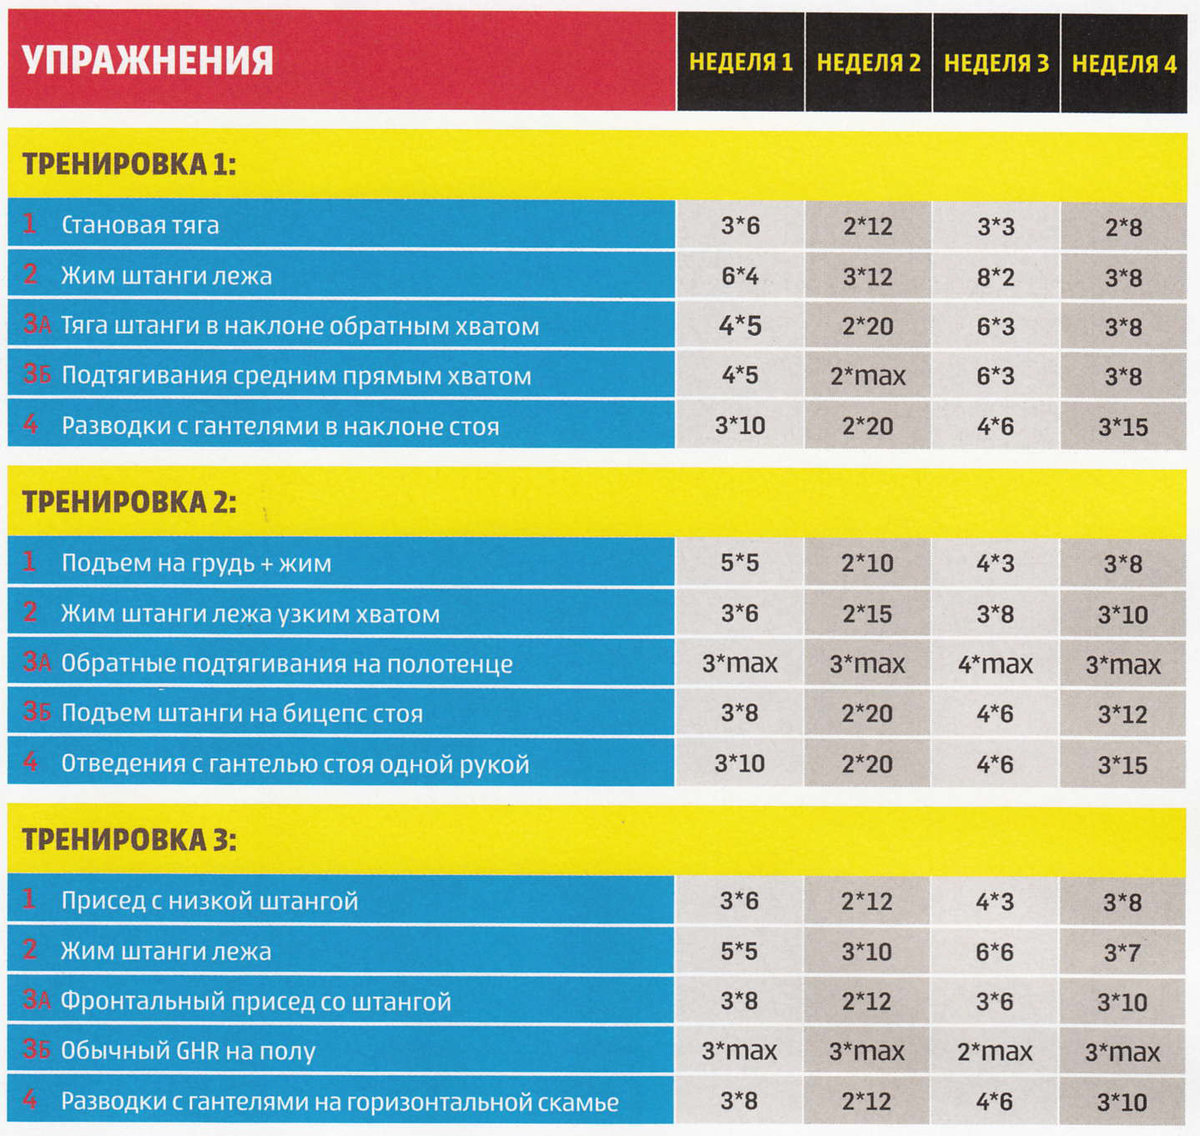 Курс на массу: самые эффективные препараты | vseoallergii.ru